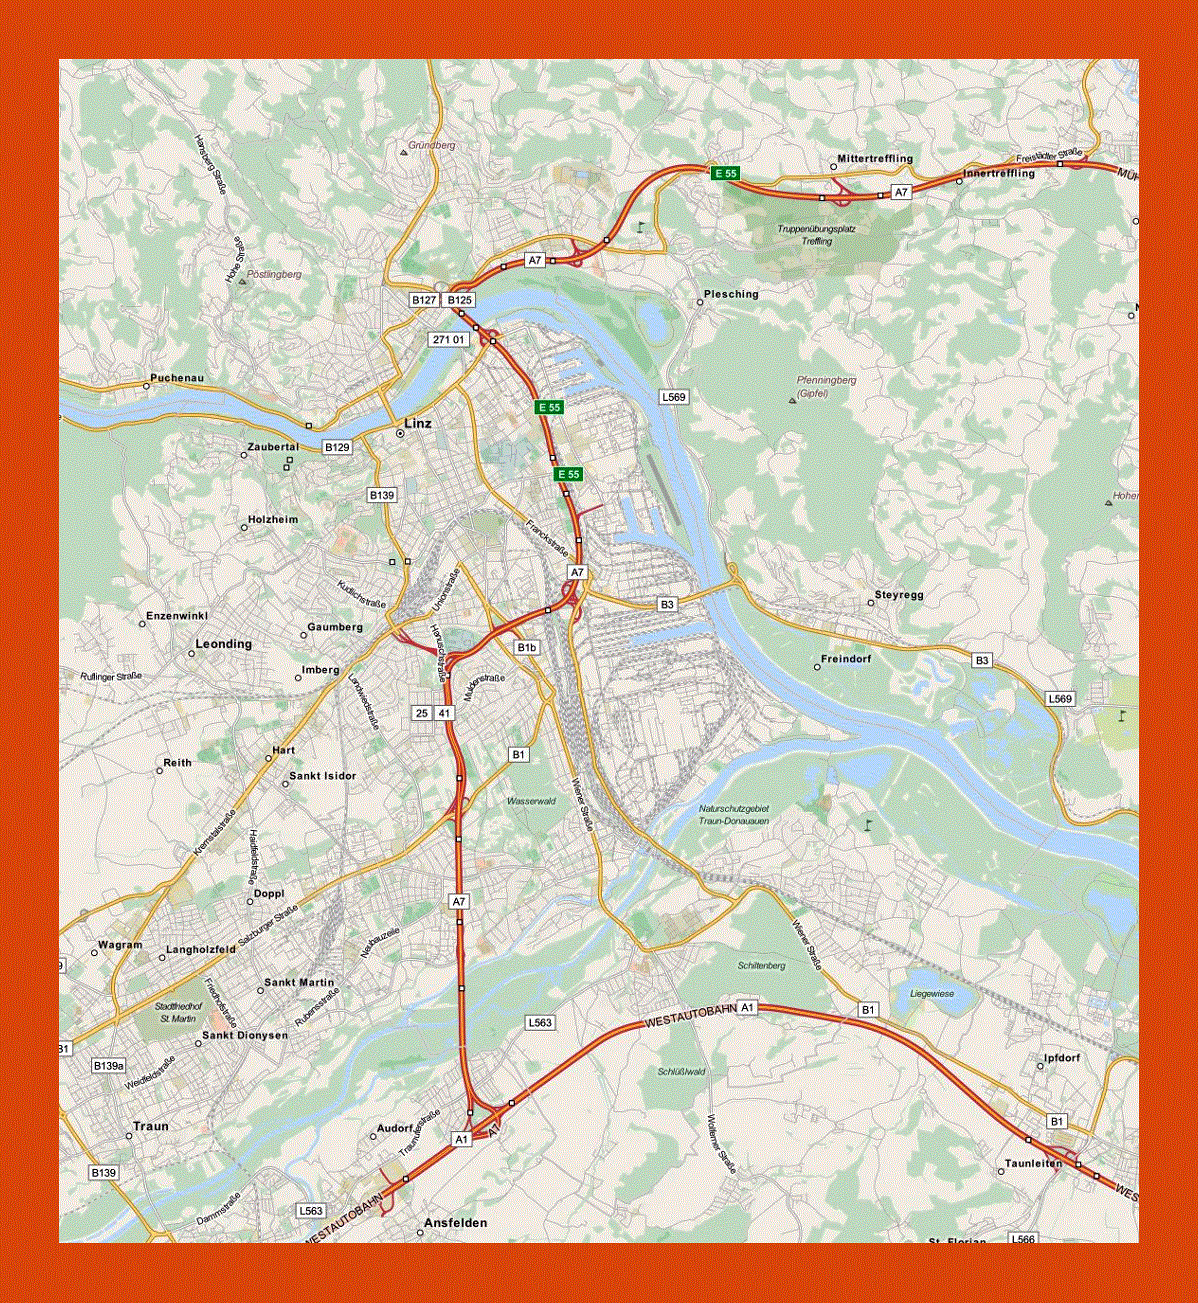 Transit map of Linz city